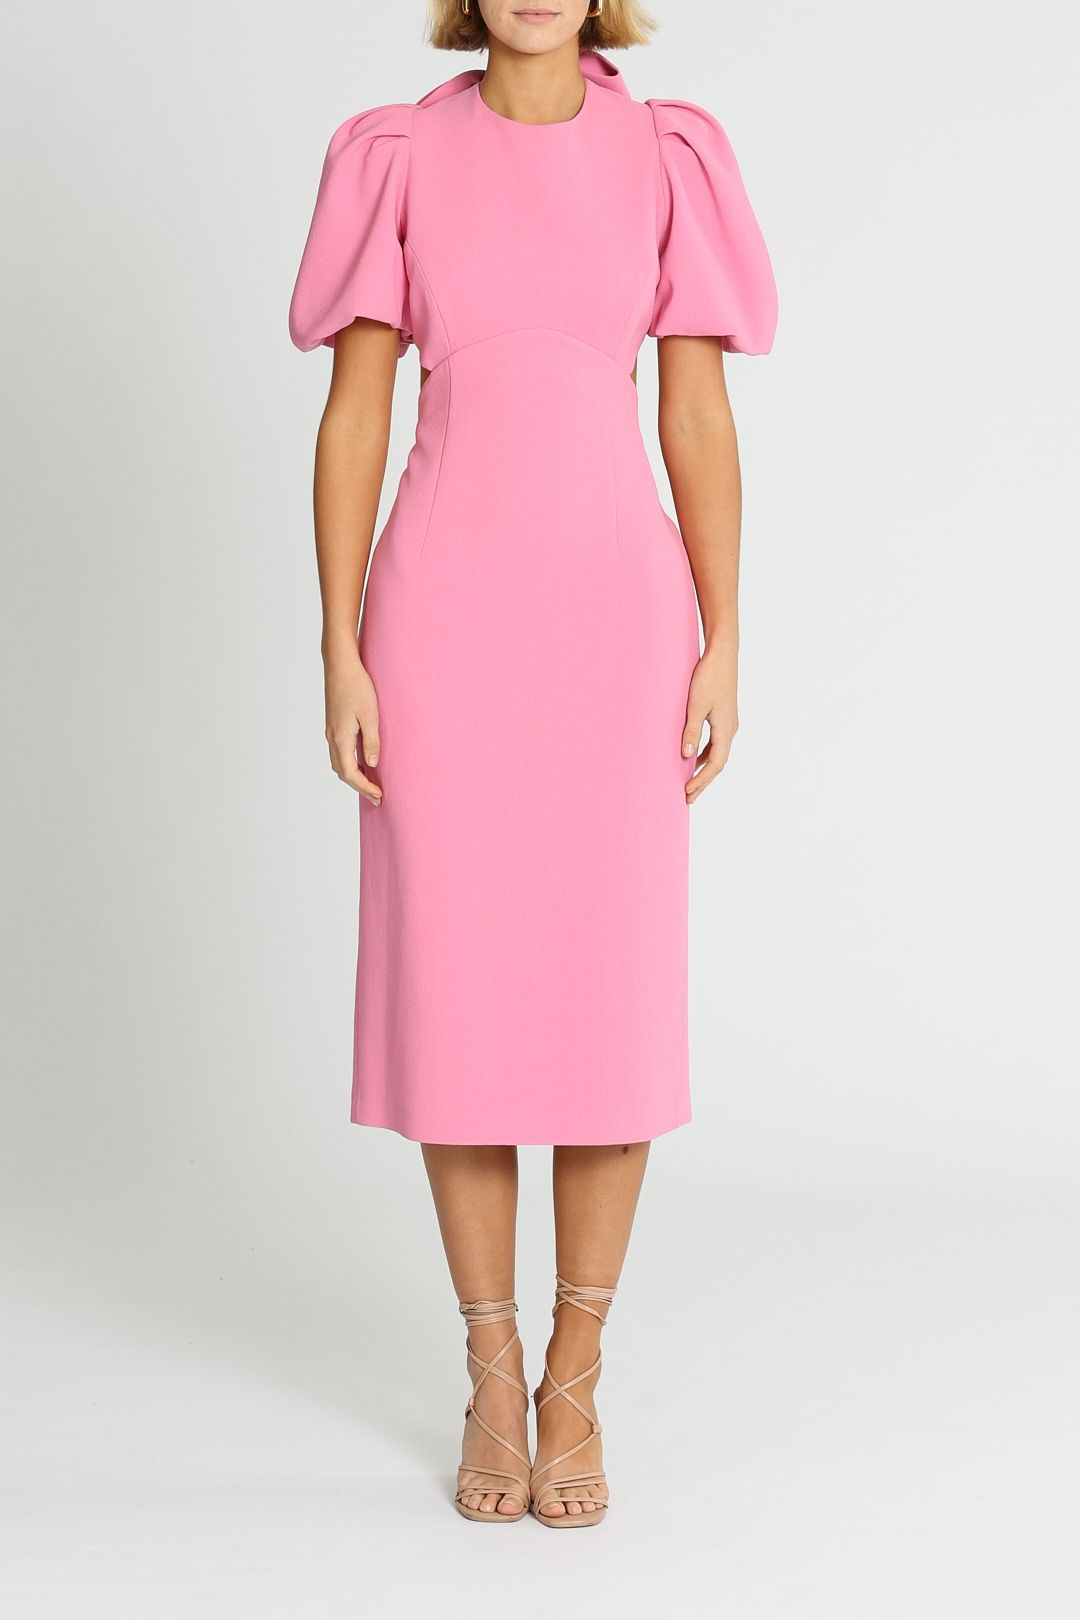 Rebecca Vallance Ally Cut Out Midi Dress Pink